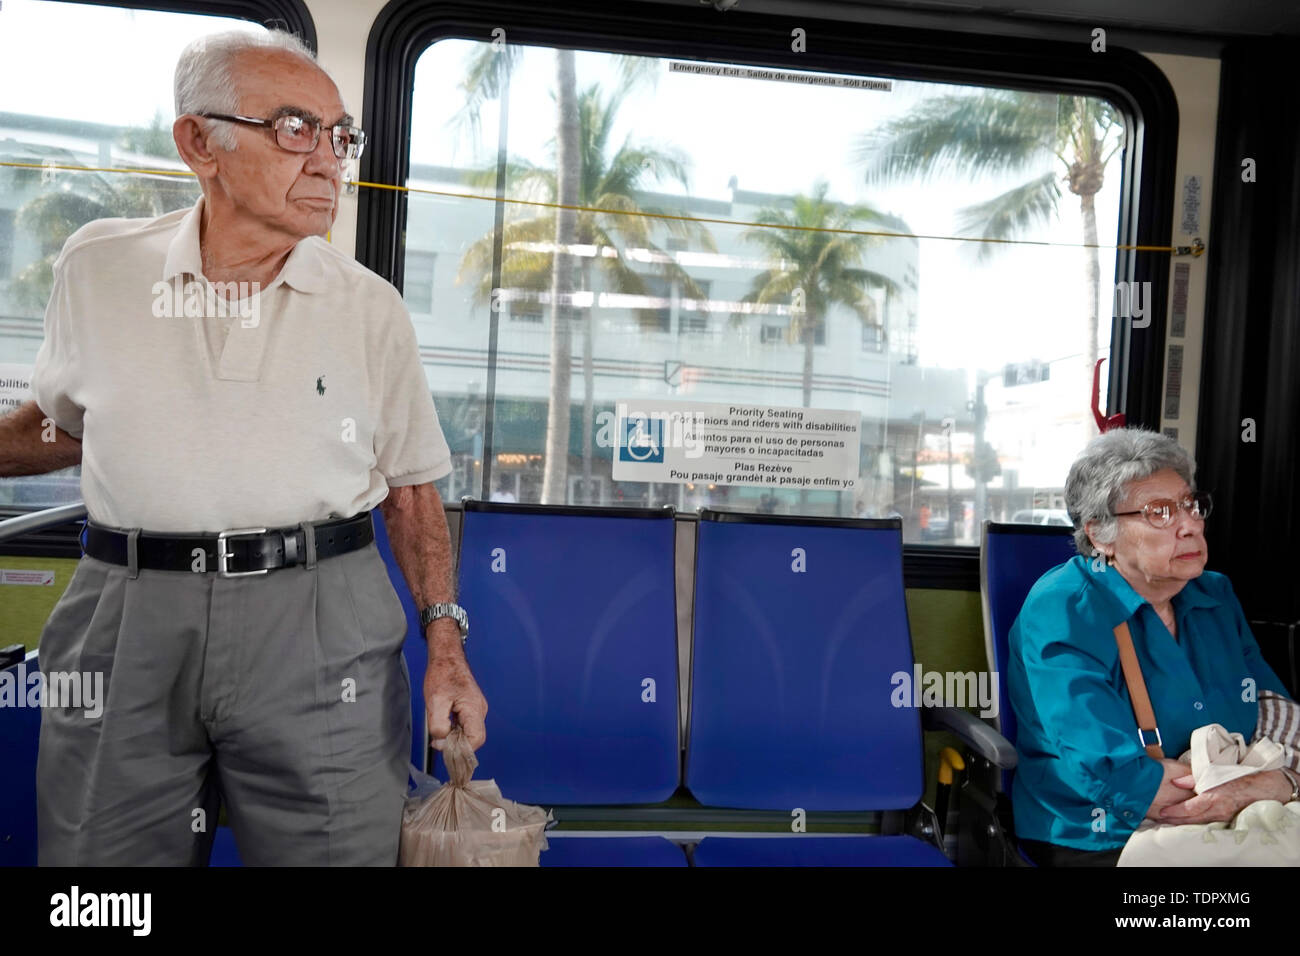 Miami Beach Florida, Washington Avenue, Miami-Dade Metrobus, an Bord, bevorzugte Sitzplätze für Behinderte, Fahrgäste, Männer, Männer, Frauen, Senioren Stockfoto